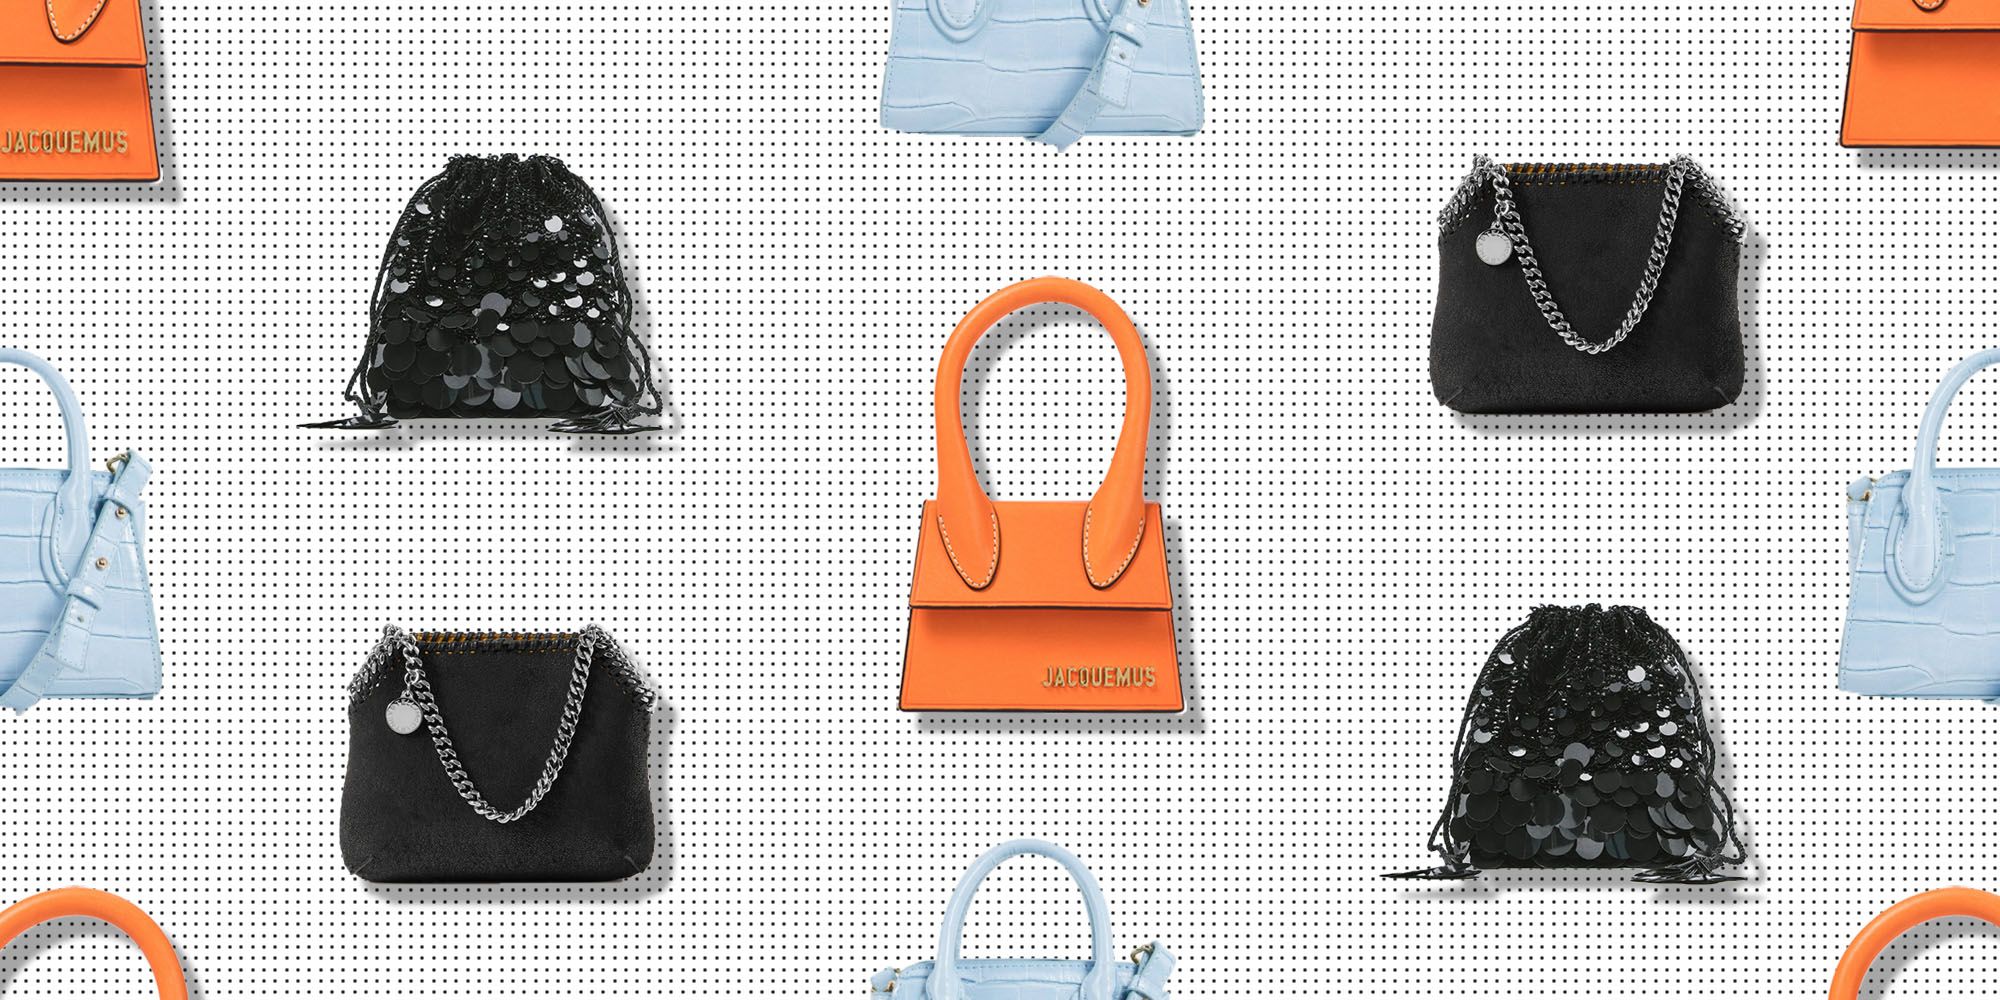 Mily Mini Clear Transparent Tote Bag Sequins Shoulder Crossbody Handbag for Women